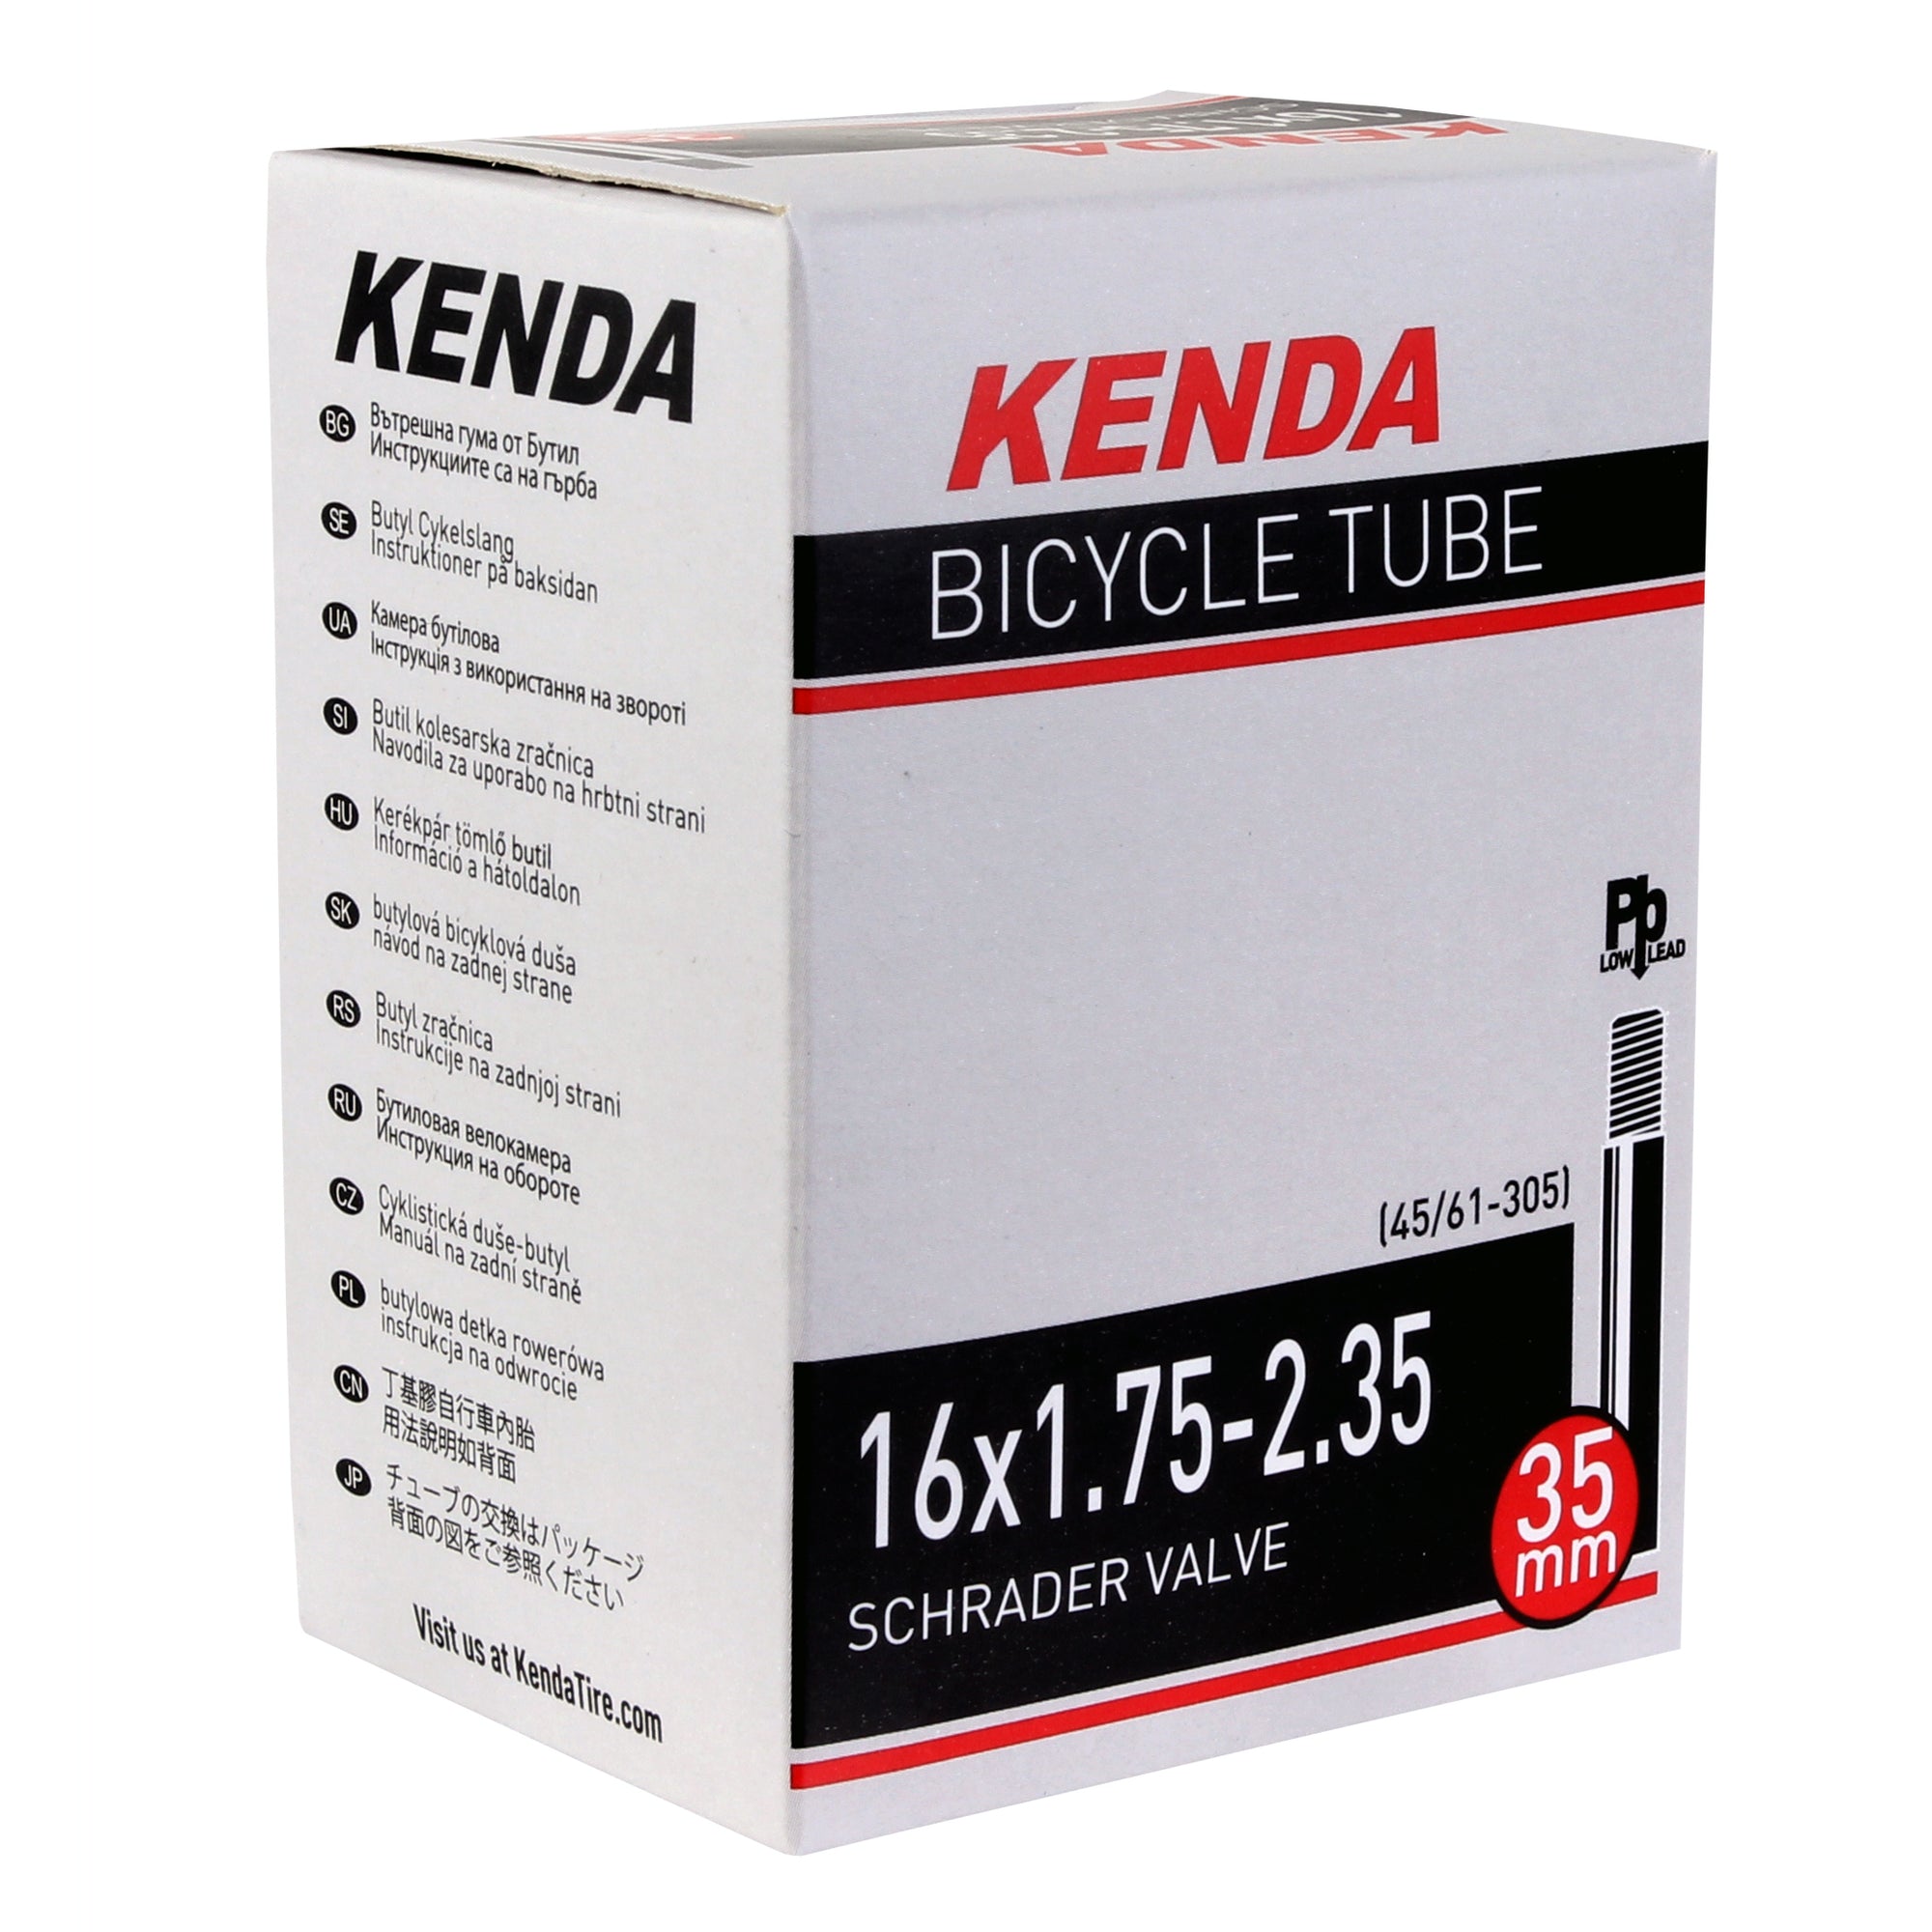 Kenda Standard Schrader Valve Tube - 16 x 1.75-2.35" - Downtown Bicycle Works 